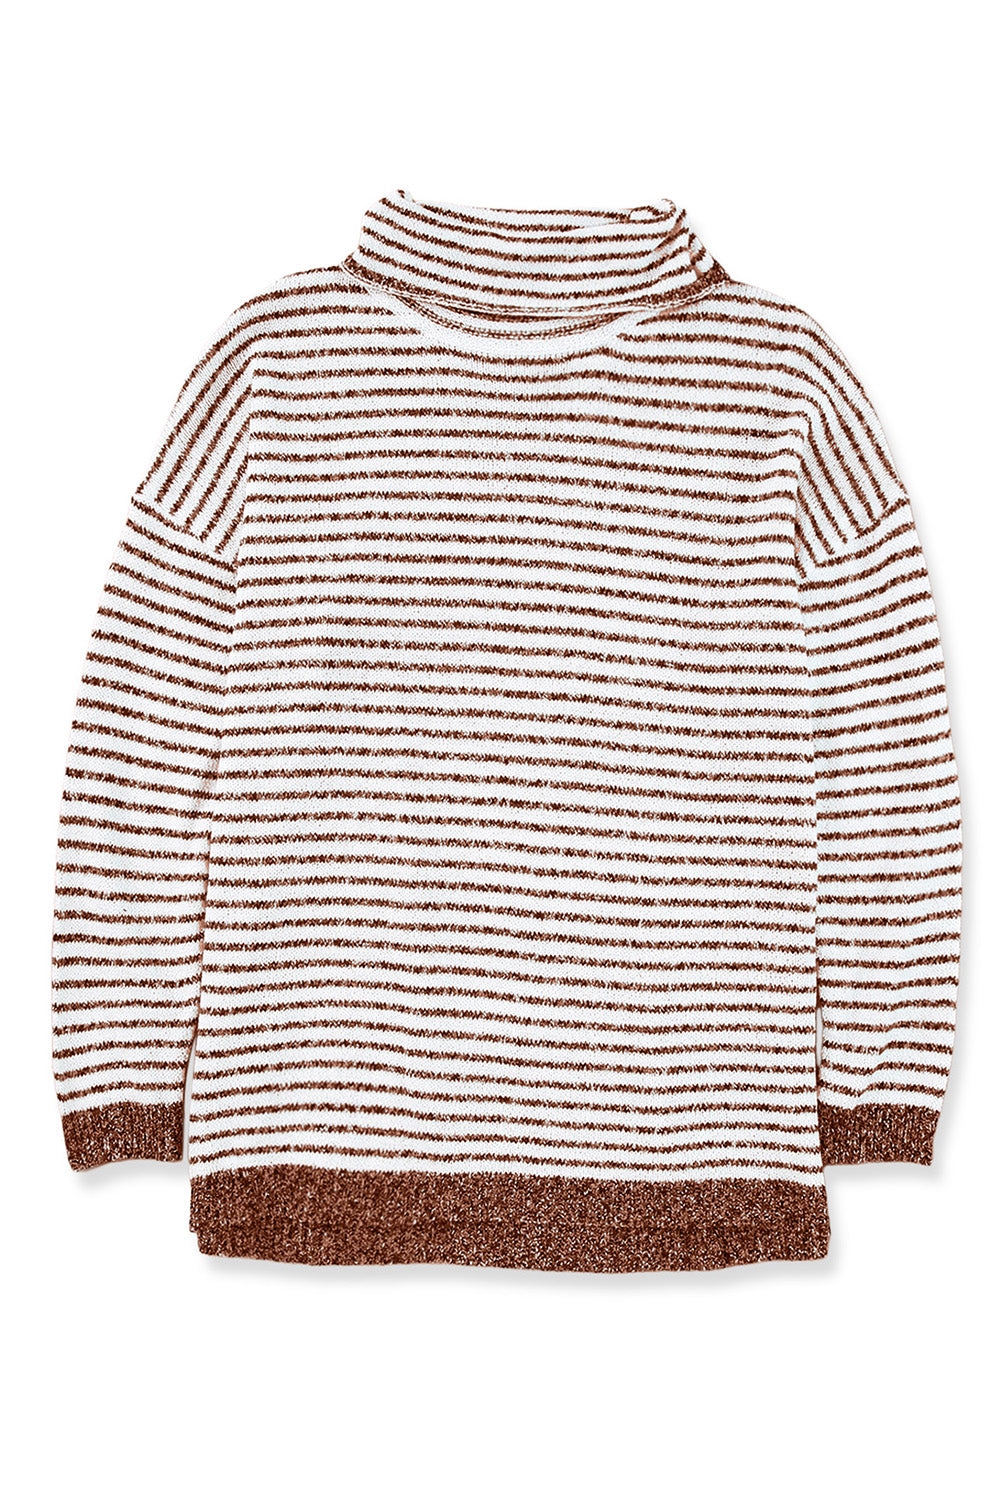 Striped Turtleneck Loose Sweater